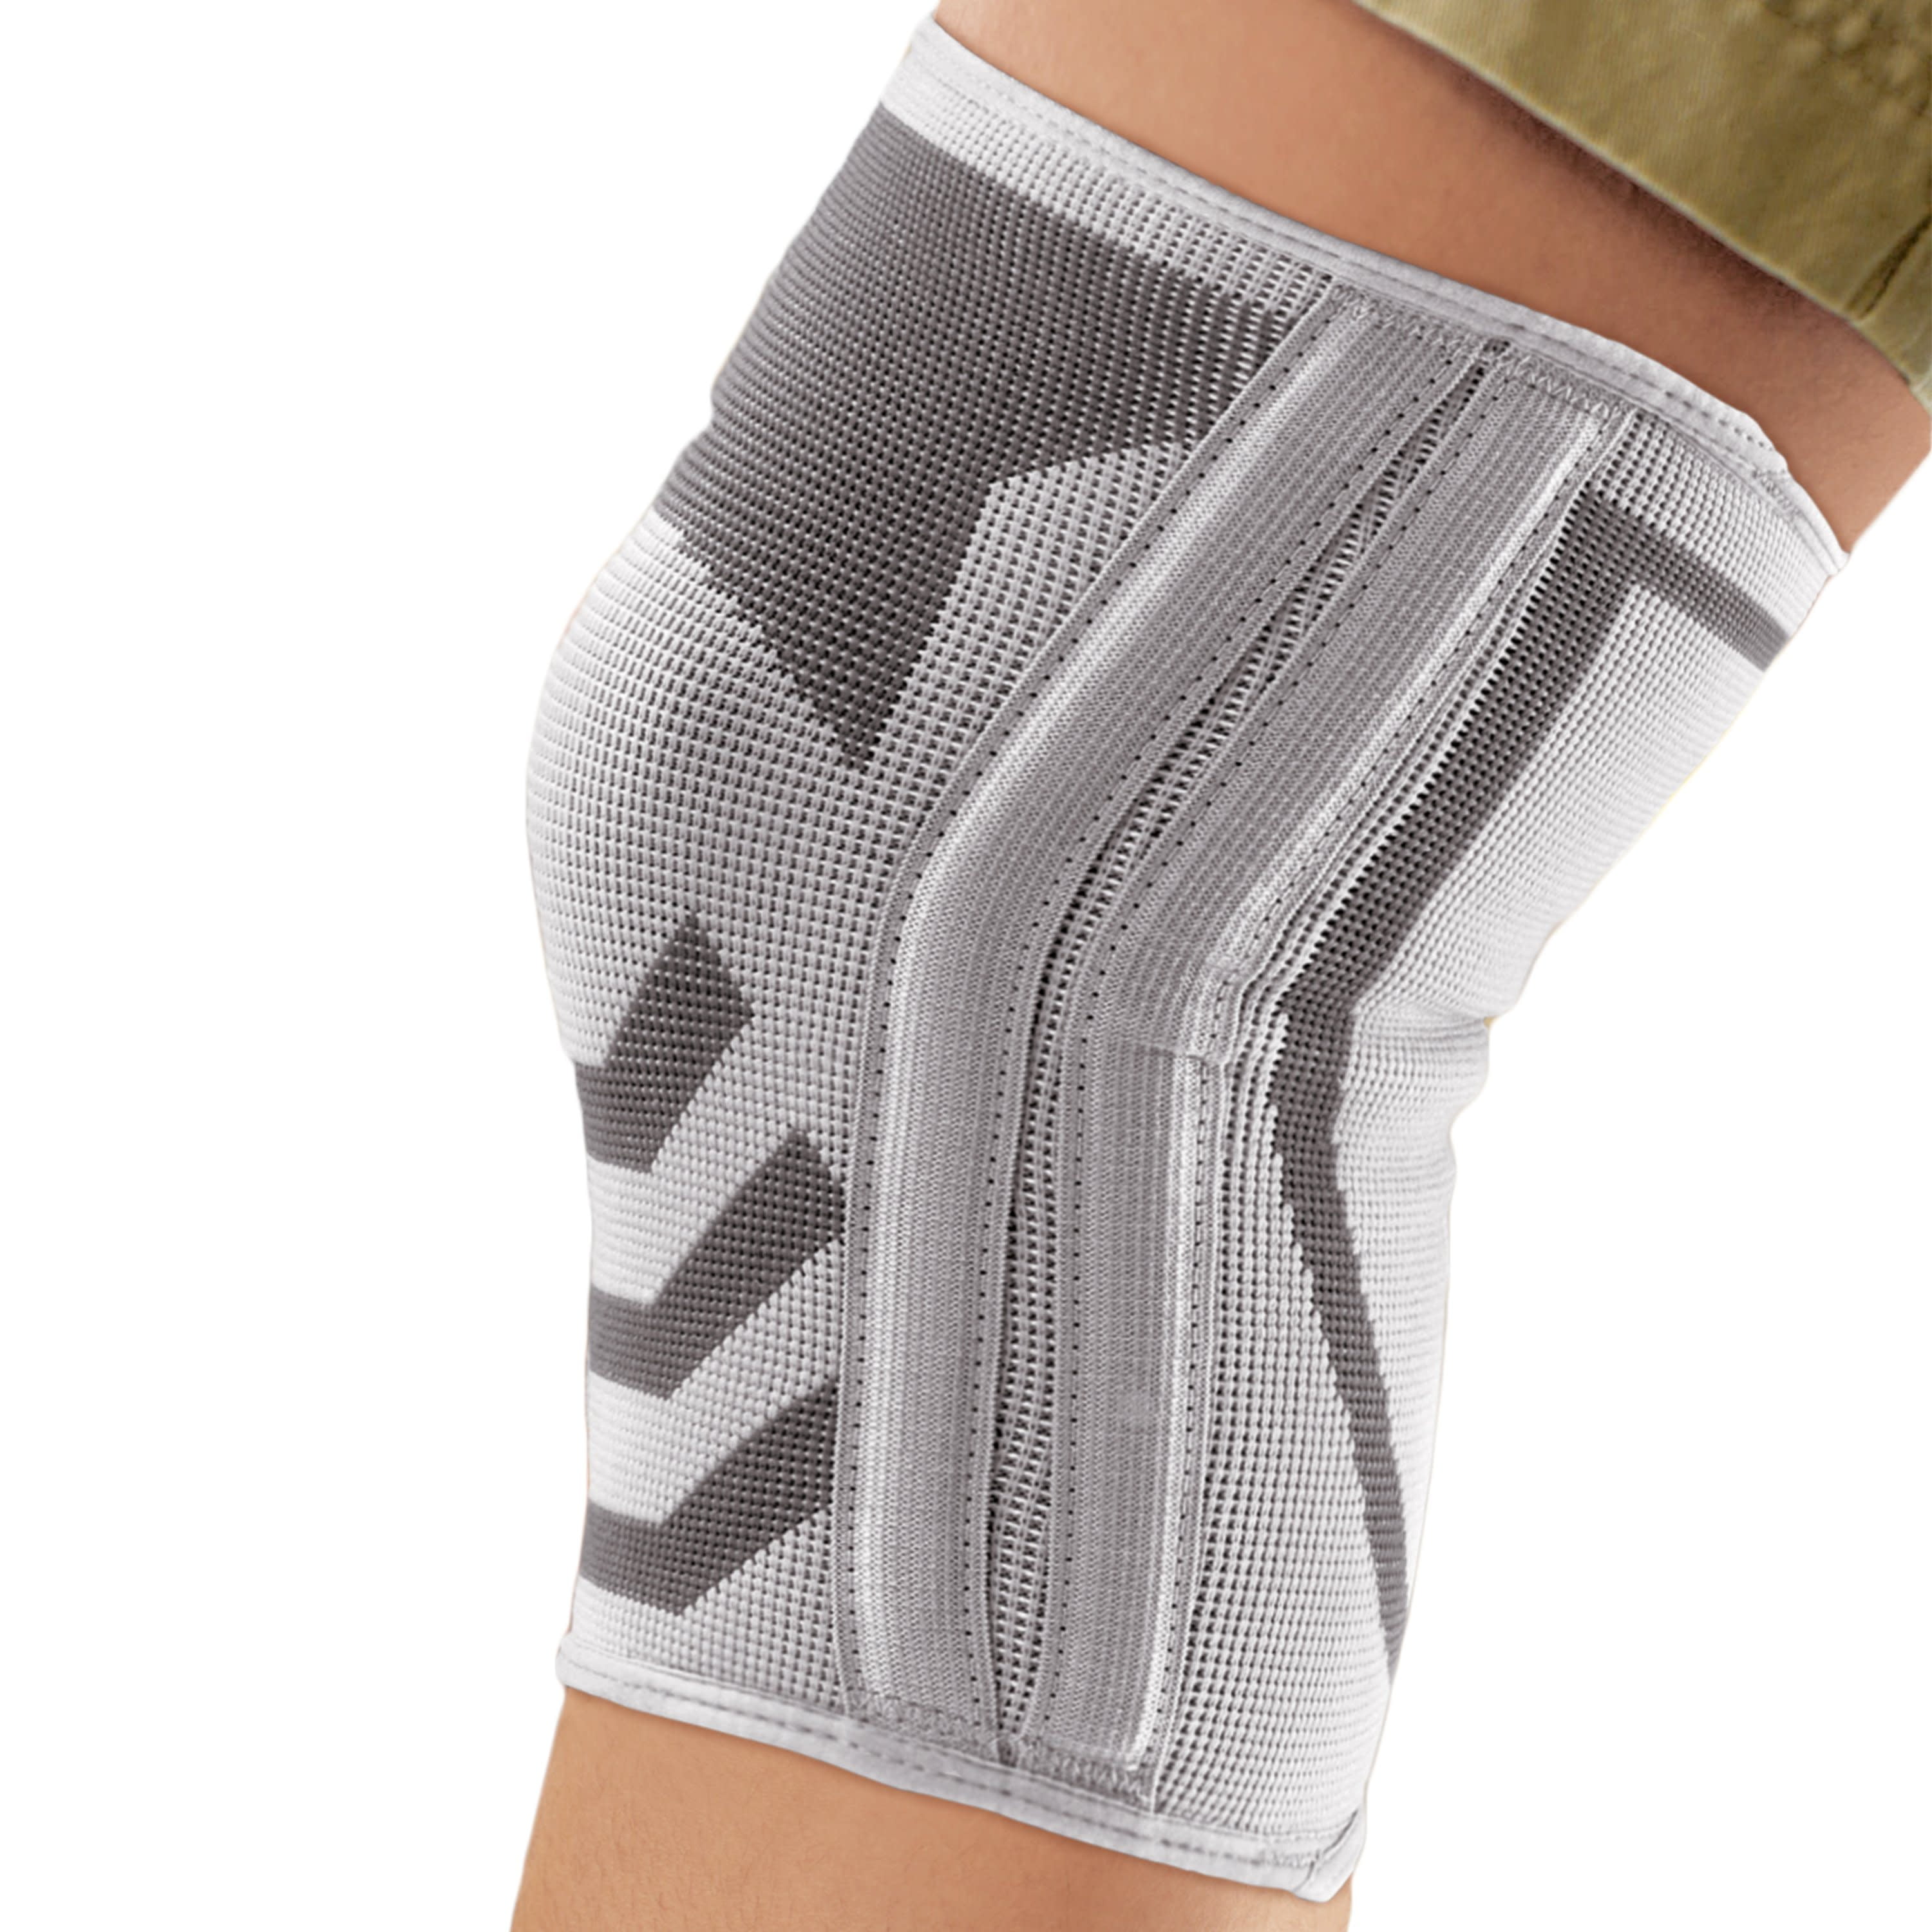 ACE Brand Compression Knee Brace W/ Side Stabilizers, Size Small 